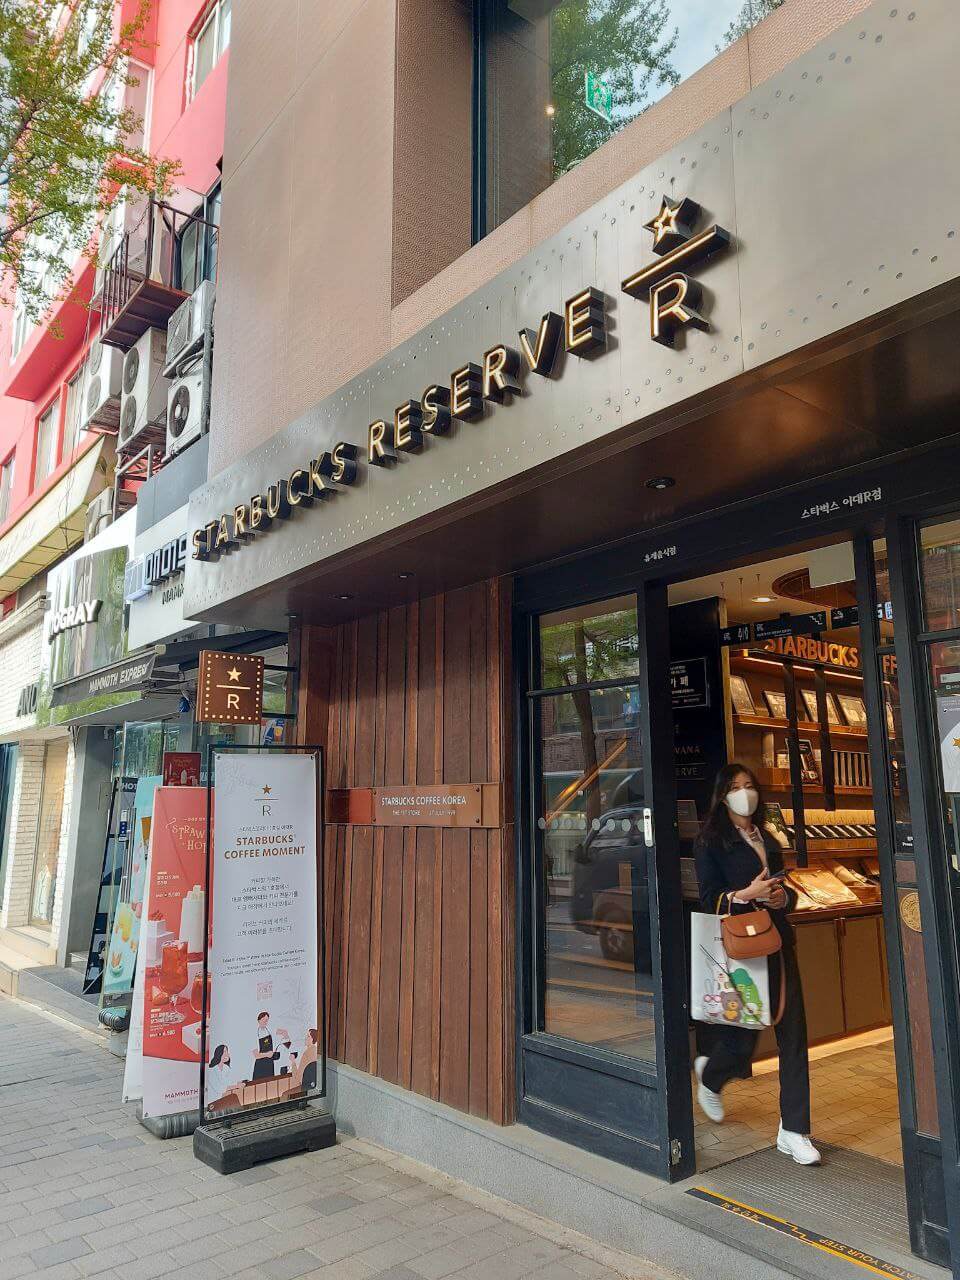 Ewha Starbucks Reserve is the first Starbucks in Korea